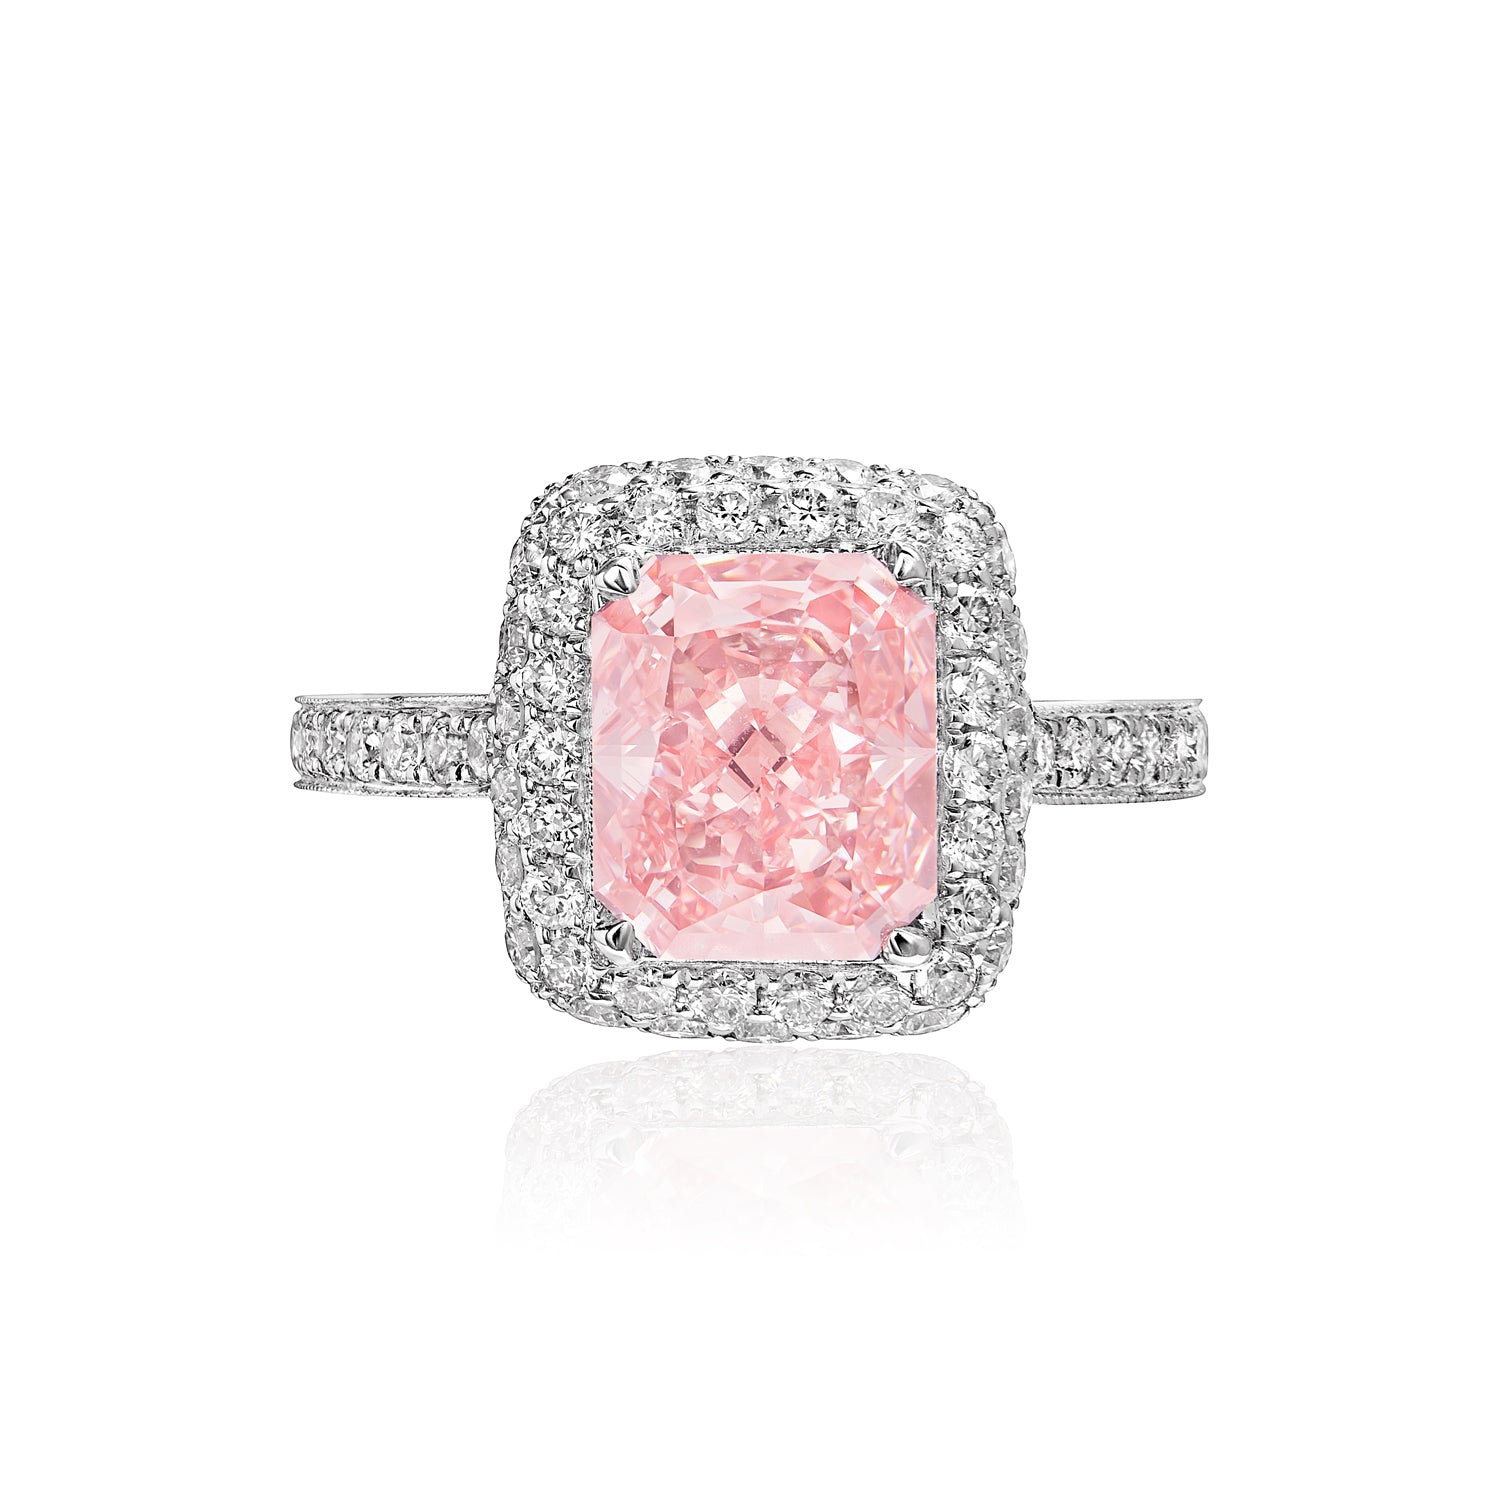 Rebecca 4 Carat Fancy Vivid Pink VVS1 Radiant Cut Diamond Engagement Ring Front View